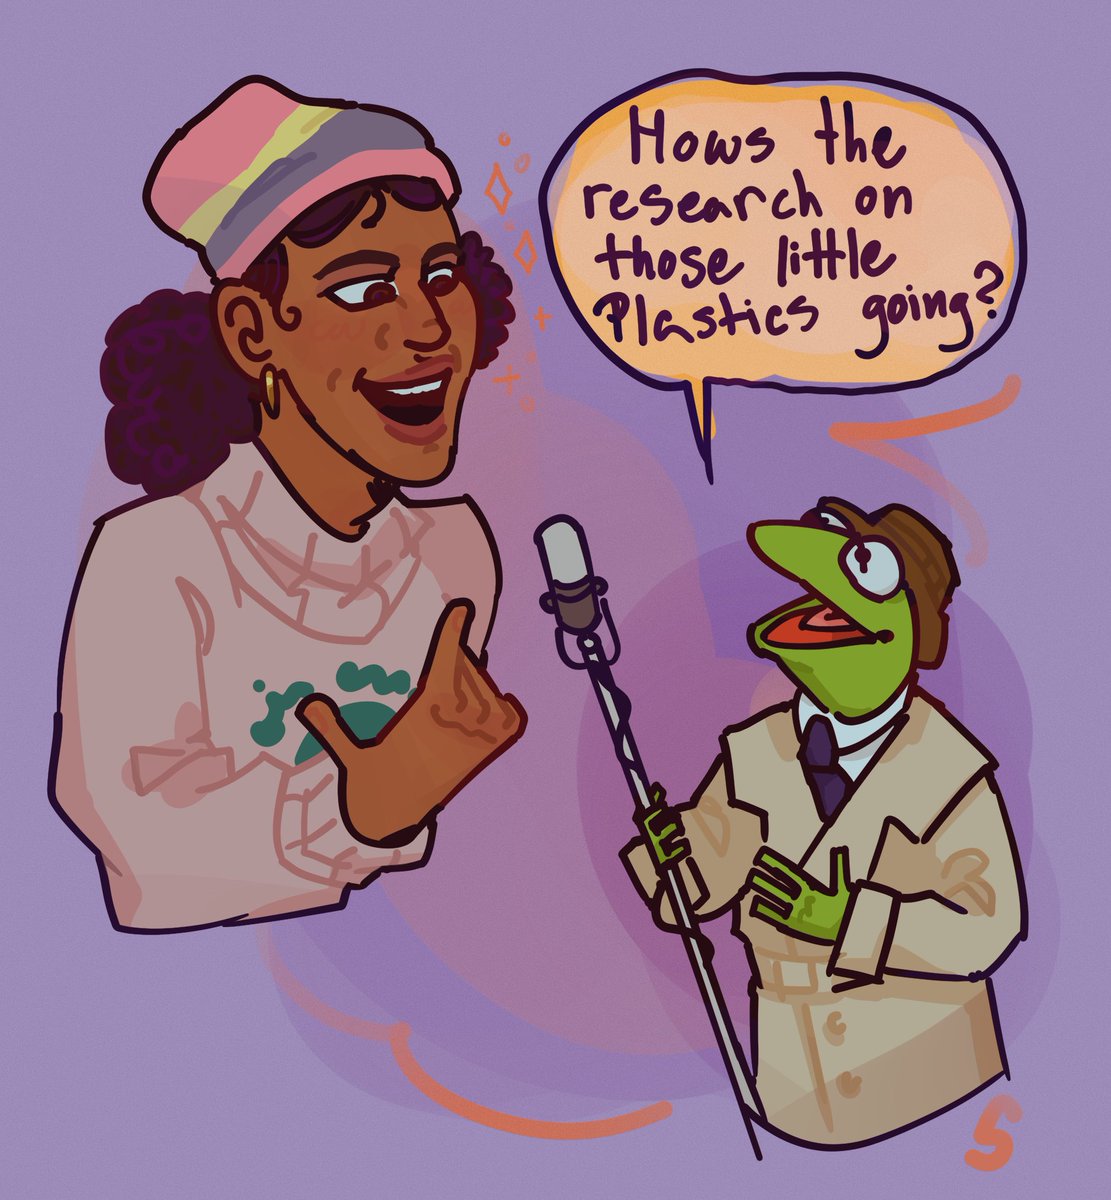 Kermit interviews Doc!
#MuppetationalMay day 3